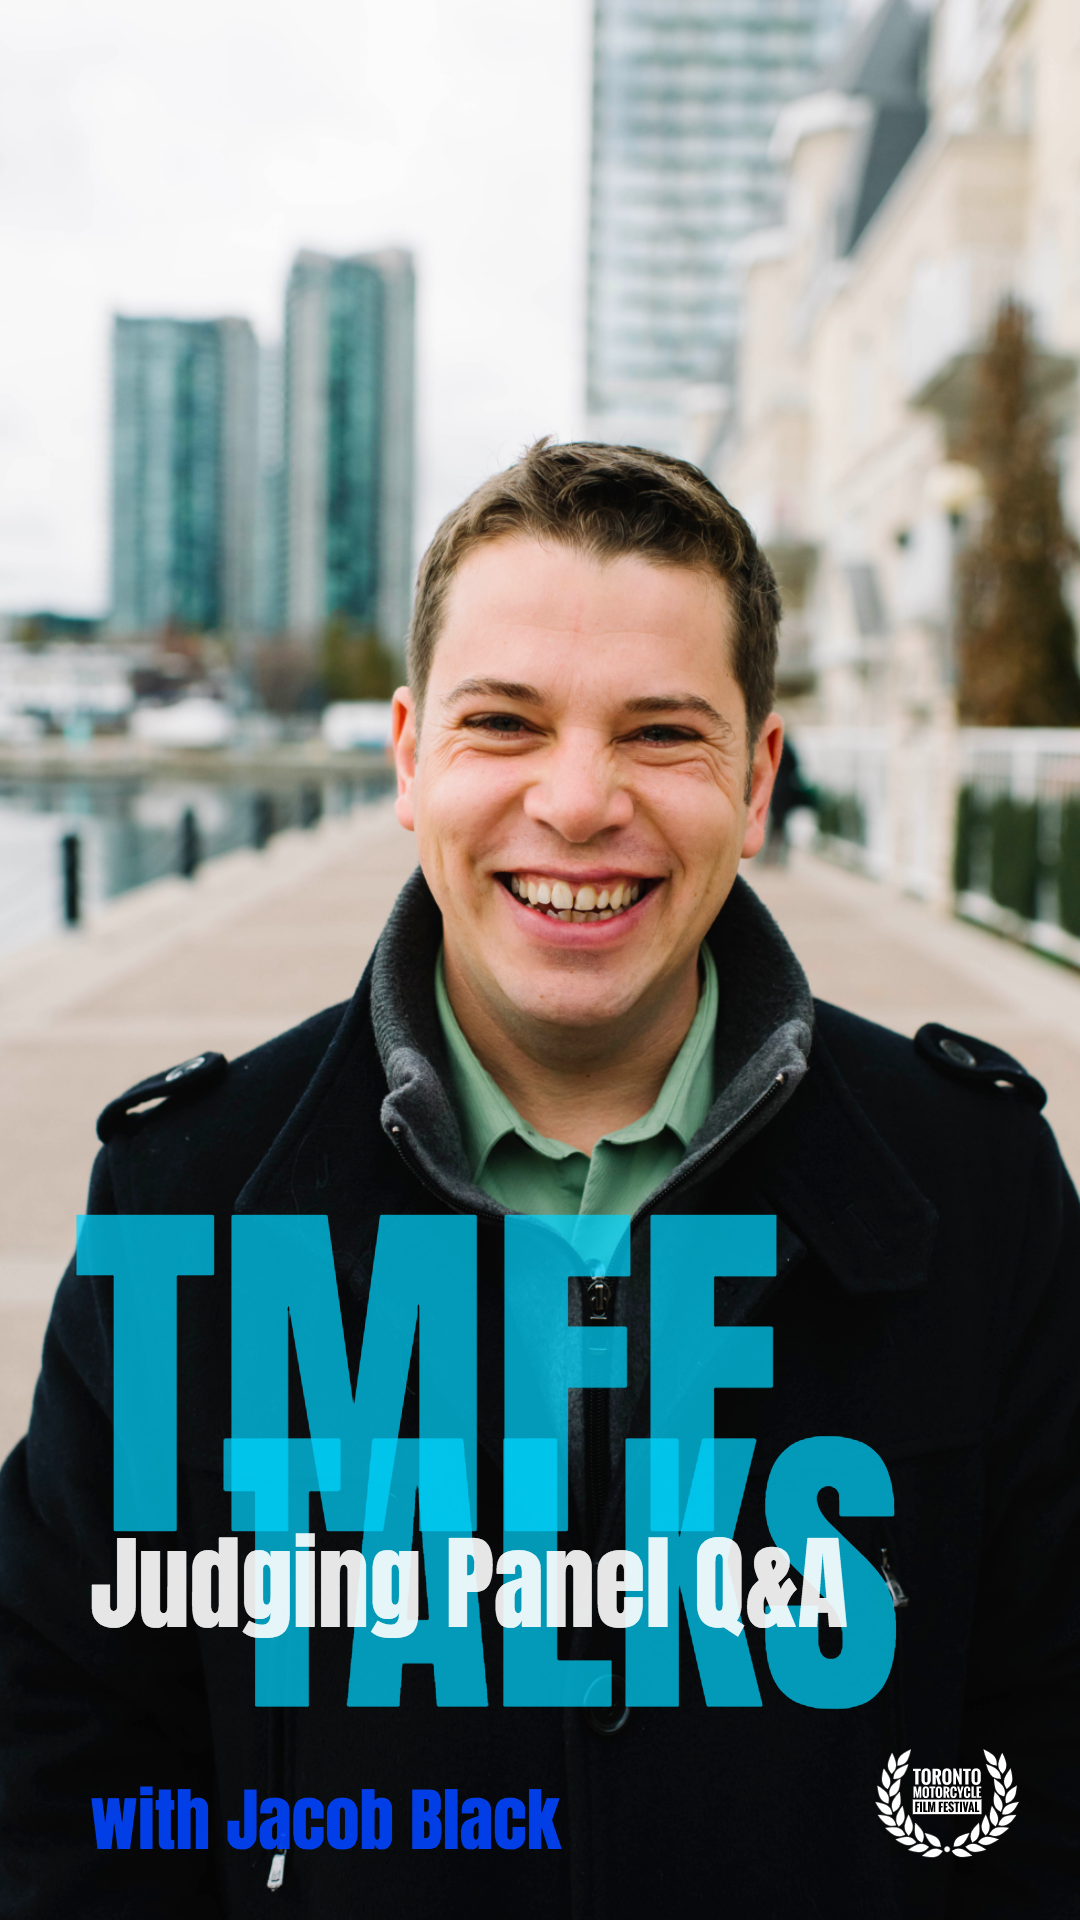 TMFF Talks - Judging Panel Q&A with Jacob Black